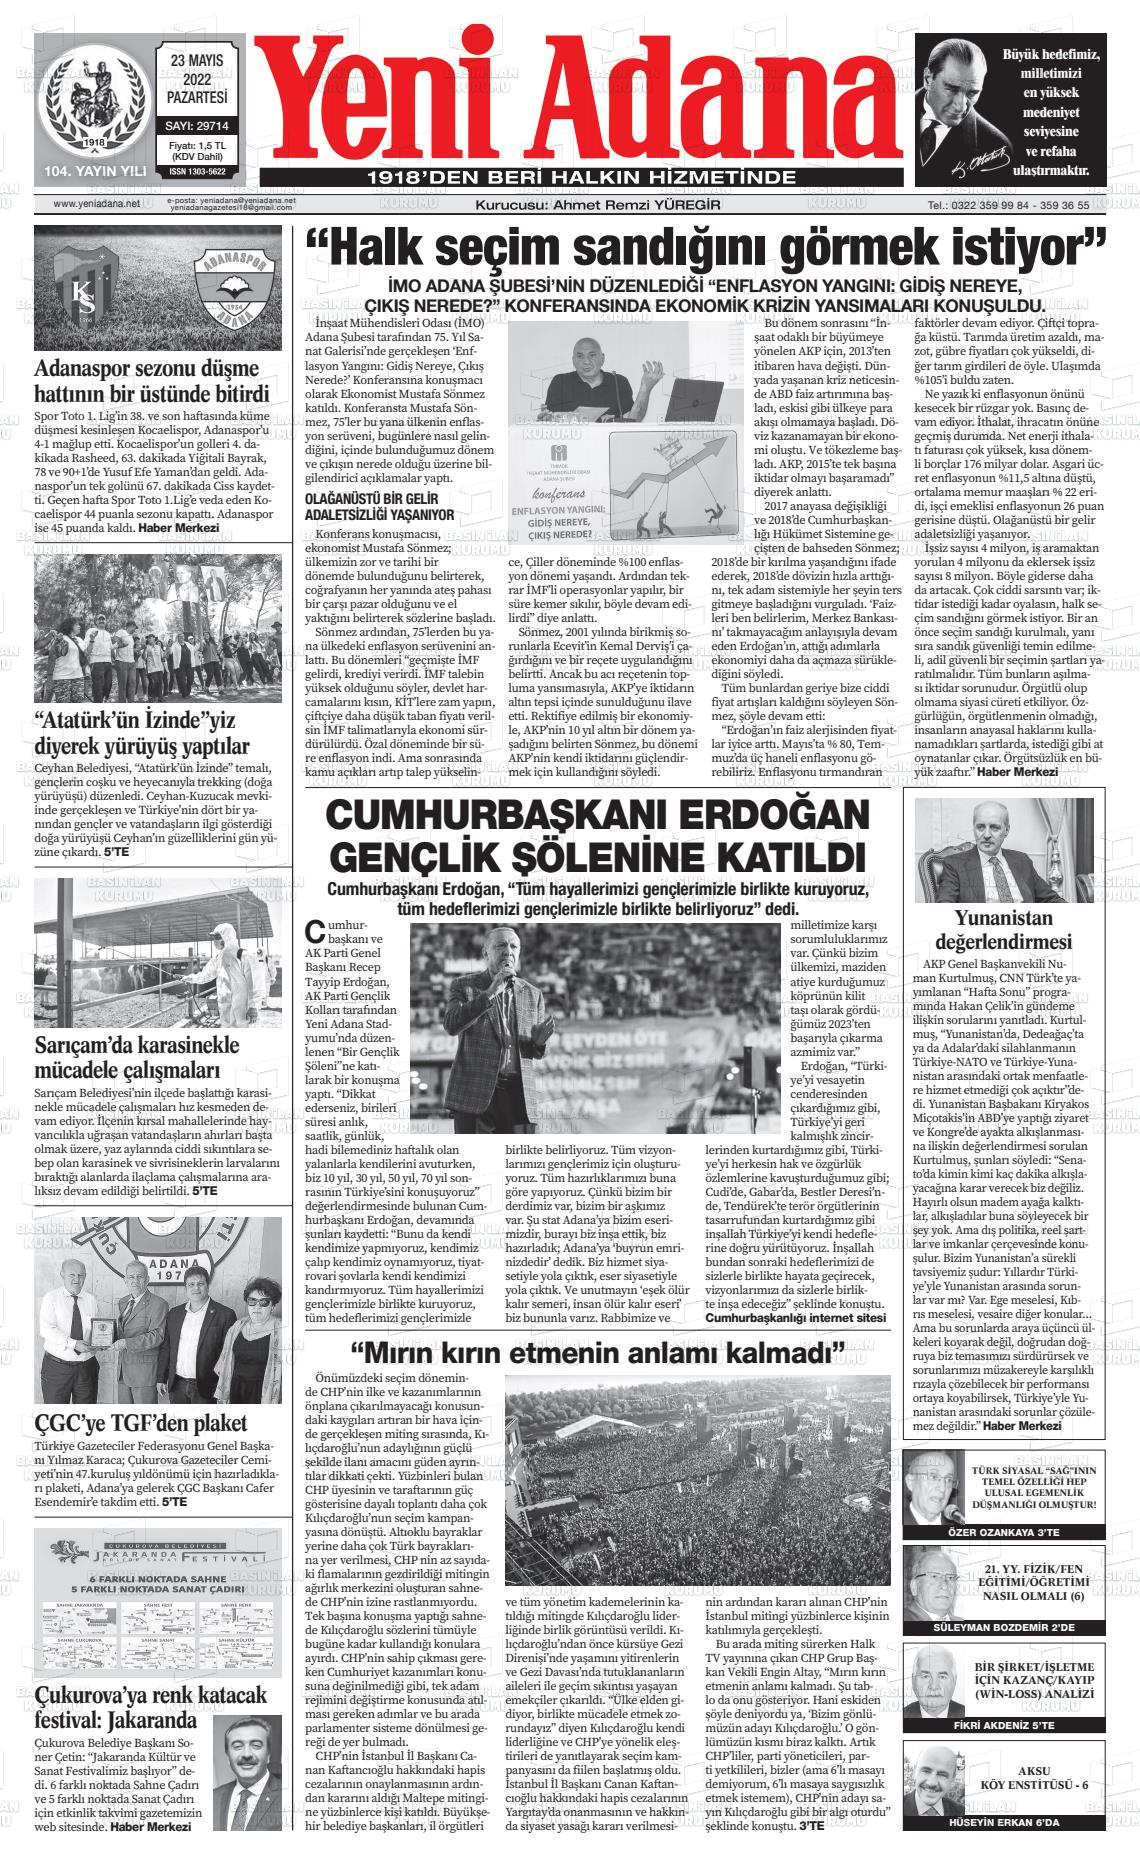 23 Mayıs 2022 Yeni Adana Gazete Manşeti